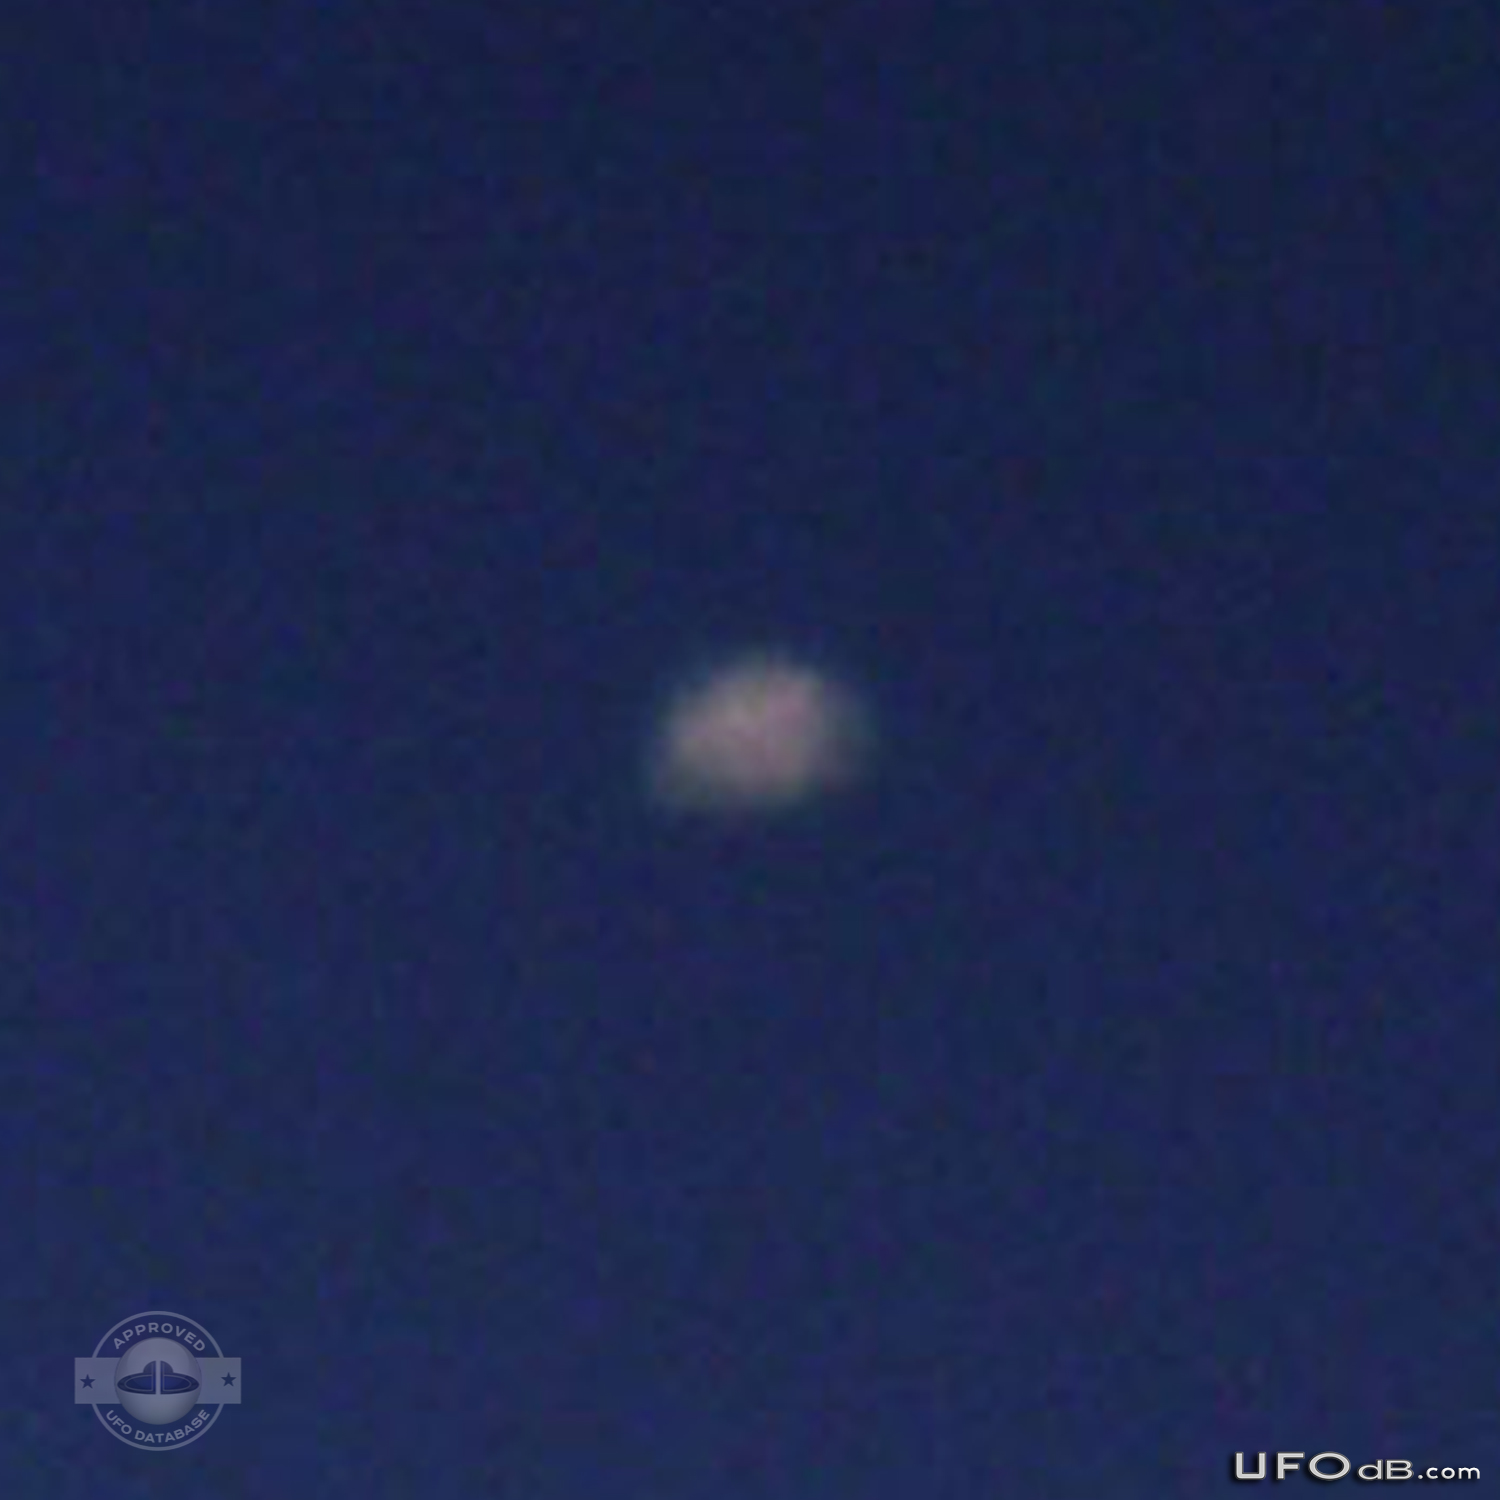 At dawn over Windsor - Bright UFO near the Detroit River | Canada 2011 UFO Picture #261-4